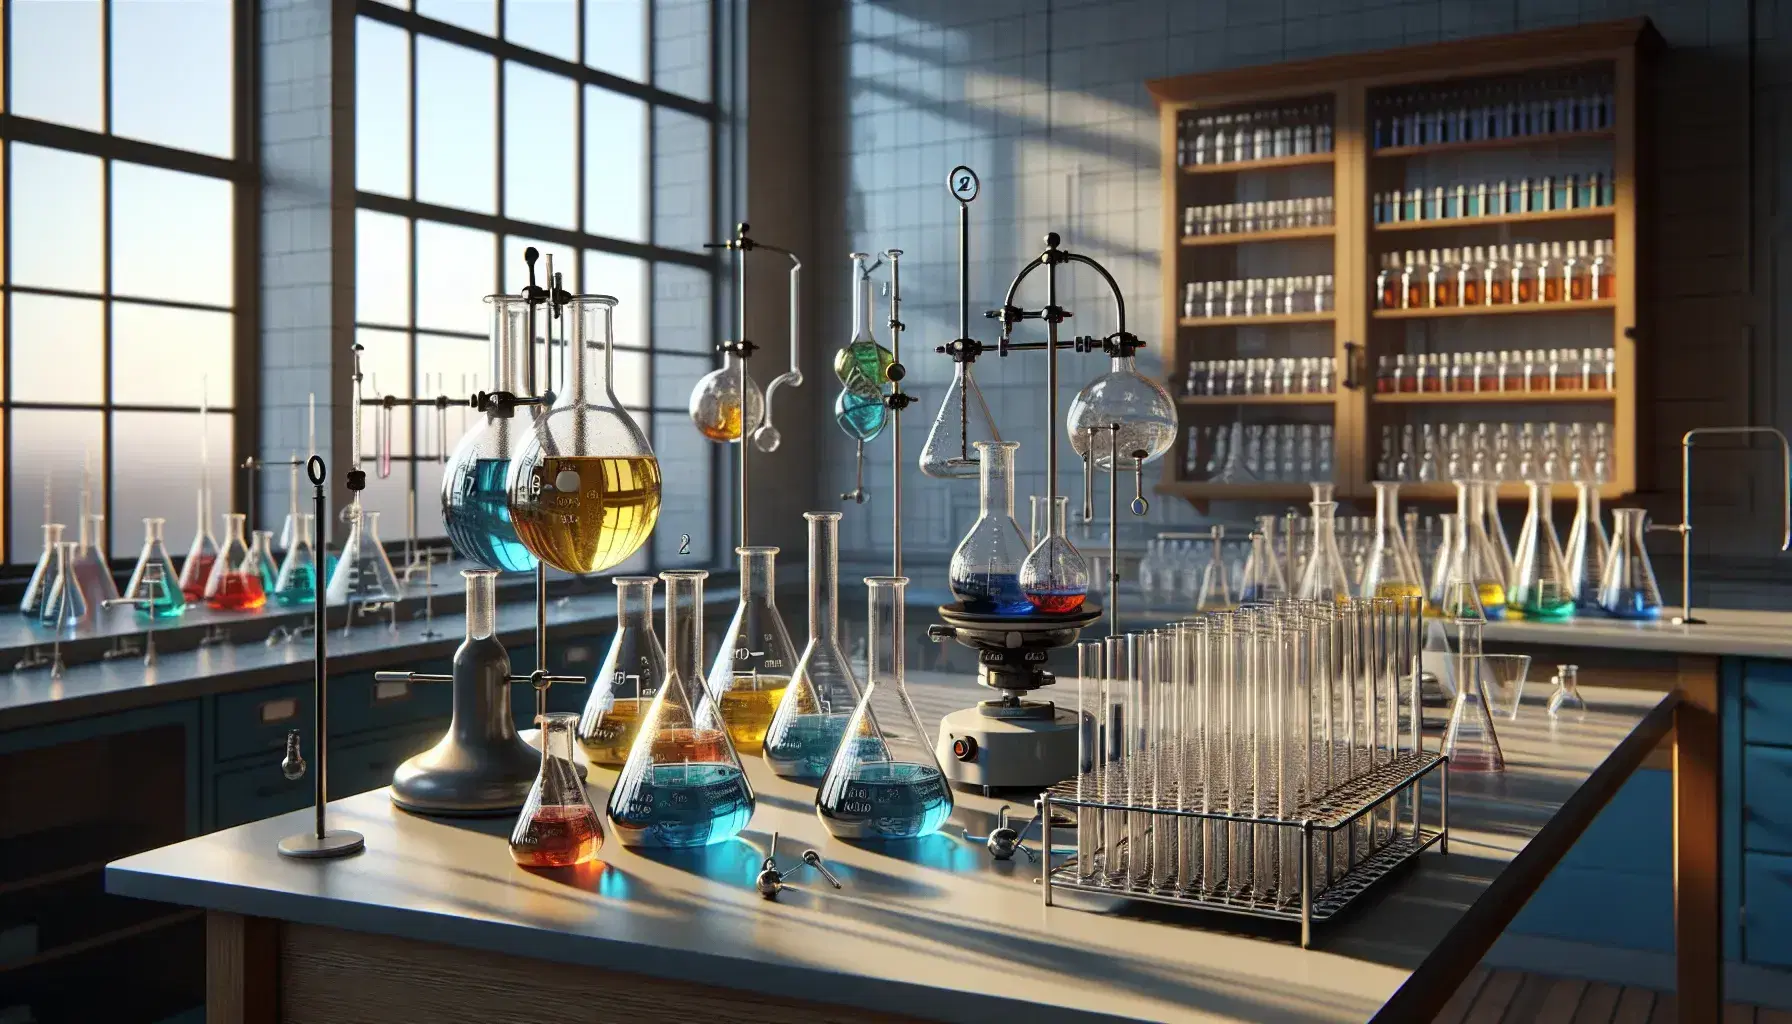 Laboratorio de química iluminado con frascos Erlenmeyer de líquidos coloridos, quemador Bunsen encendido, tubos de ensayo, balanza analítica y microscopio.